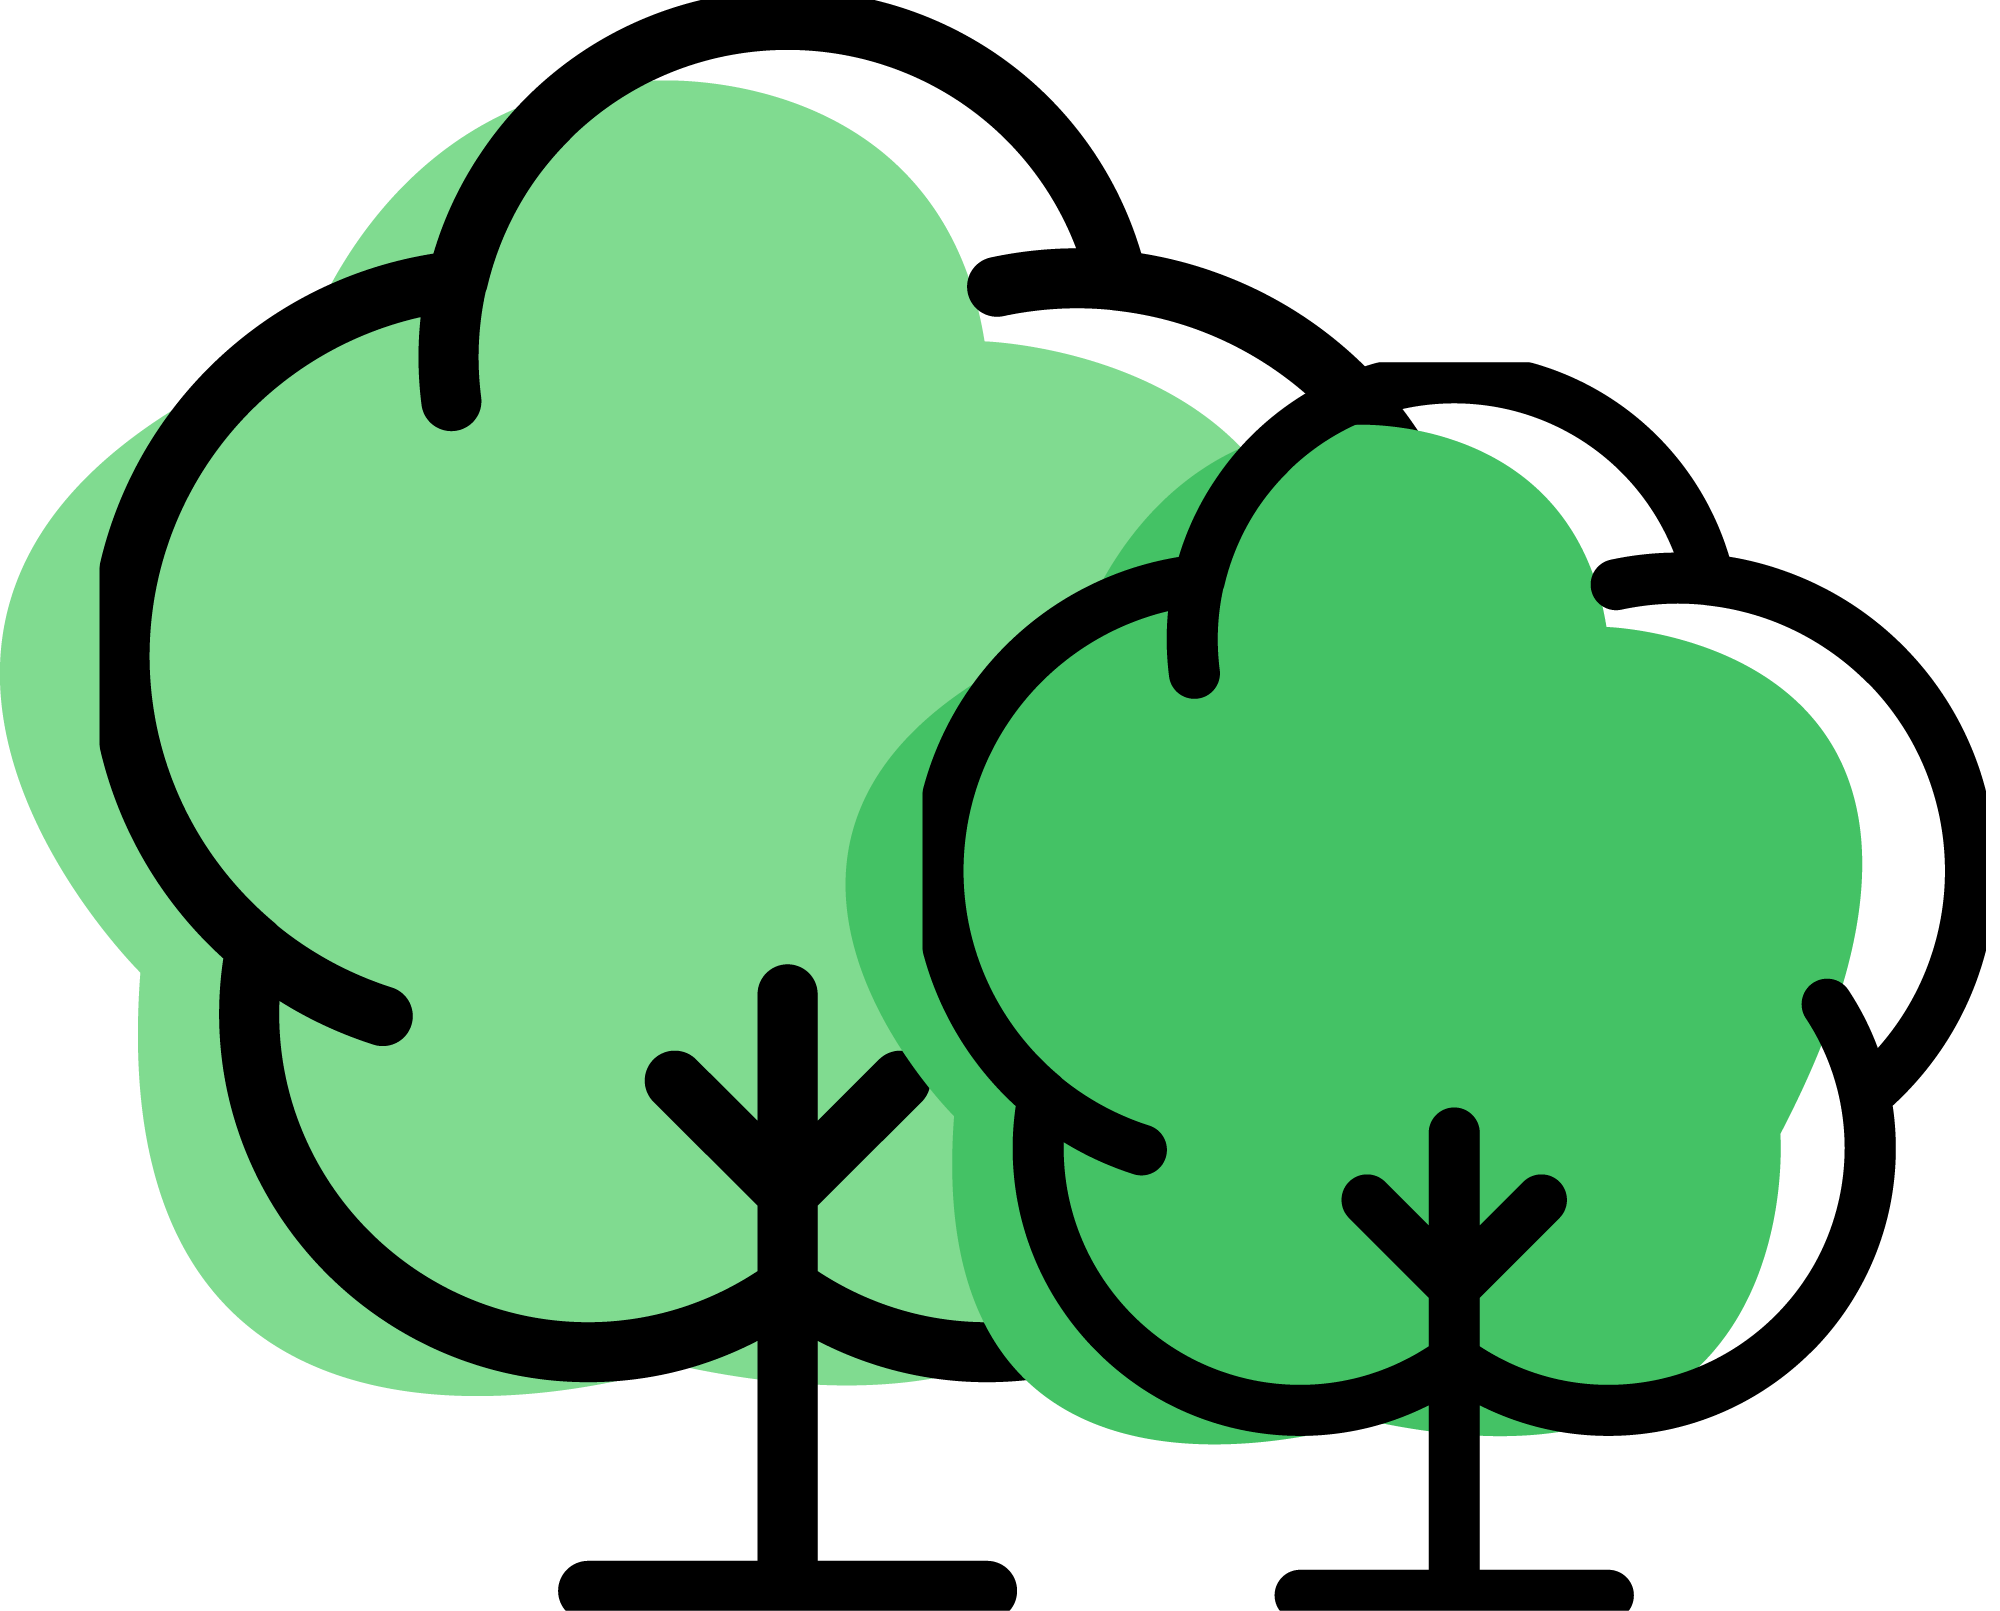 digitally drawn two green trees